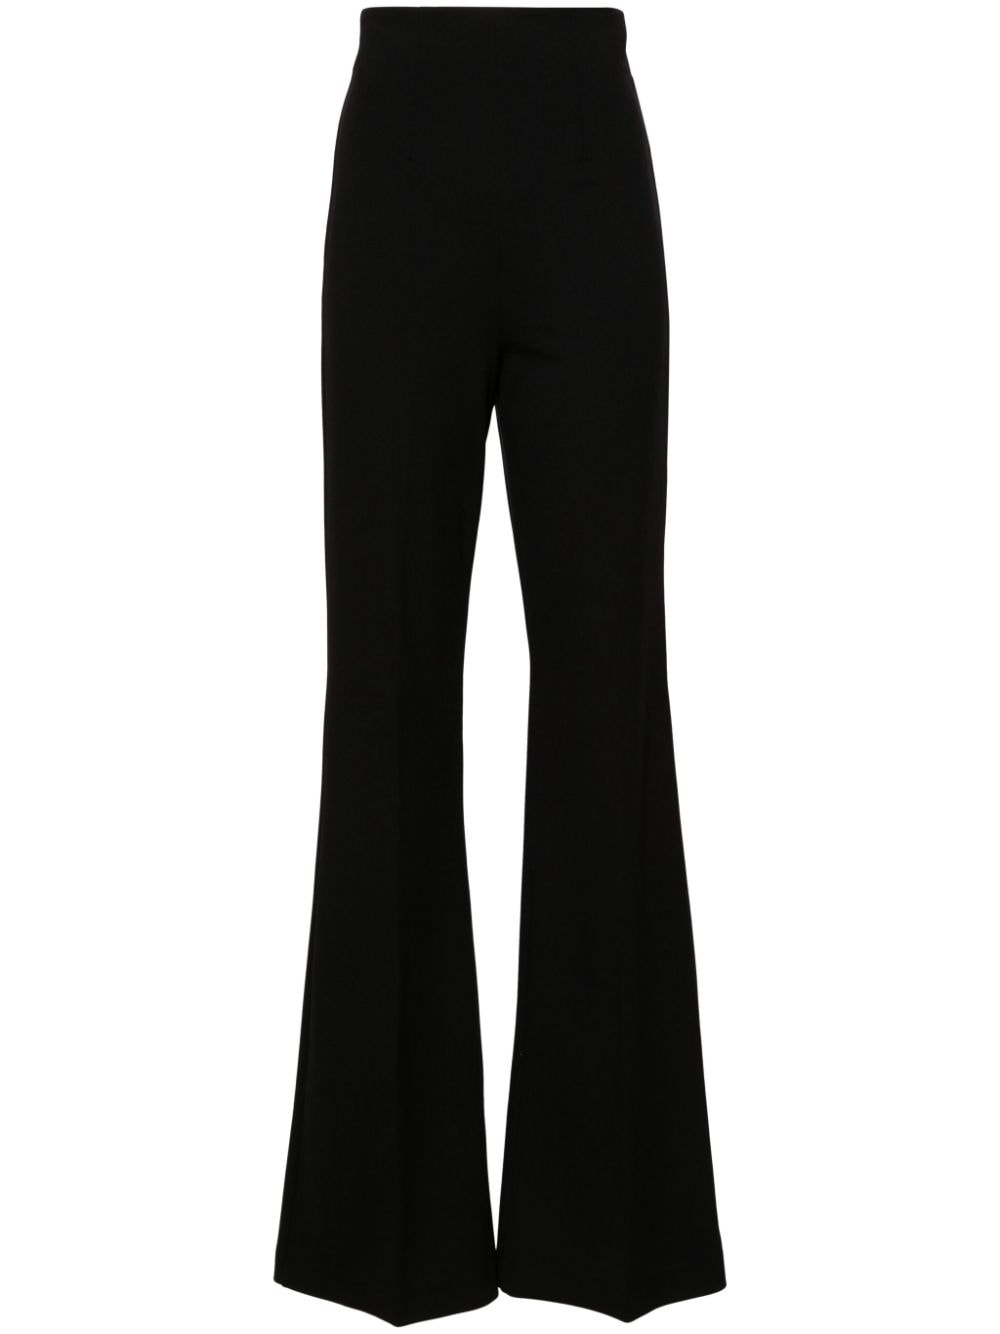 Sportmax Olea straight tailored trousers - Black